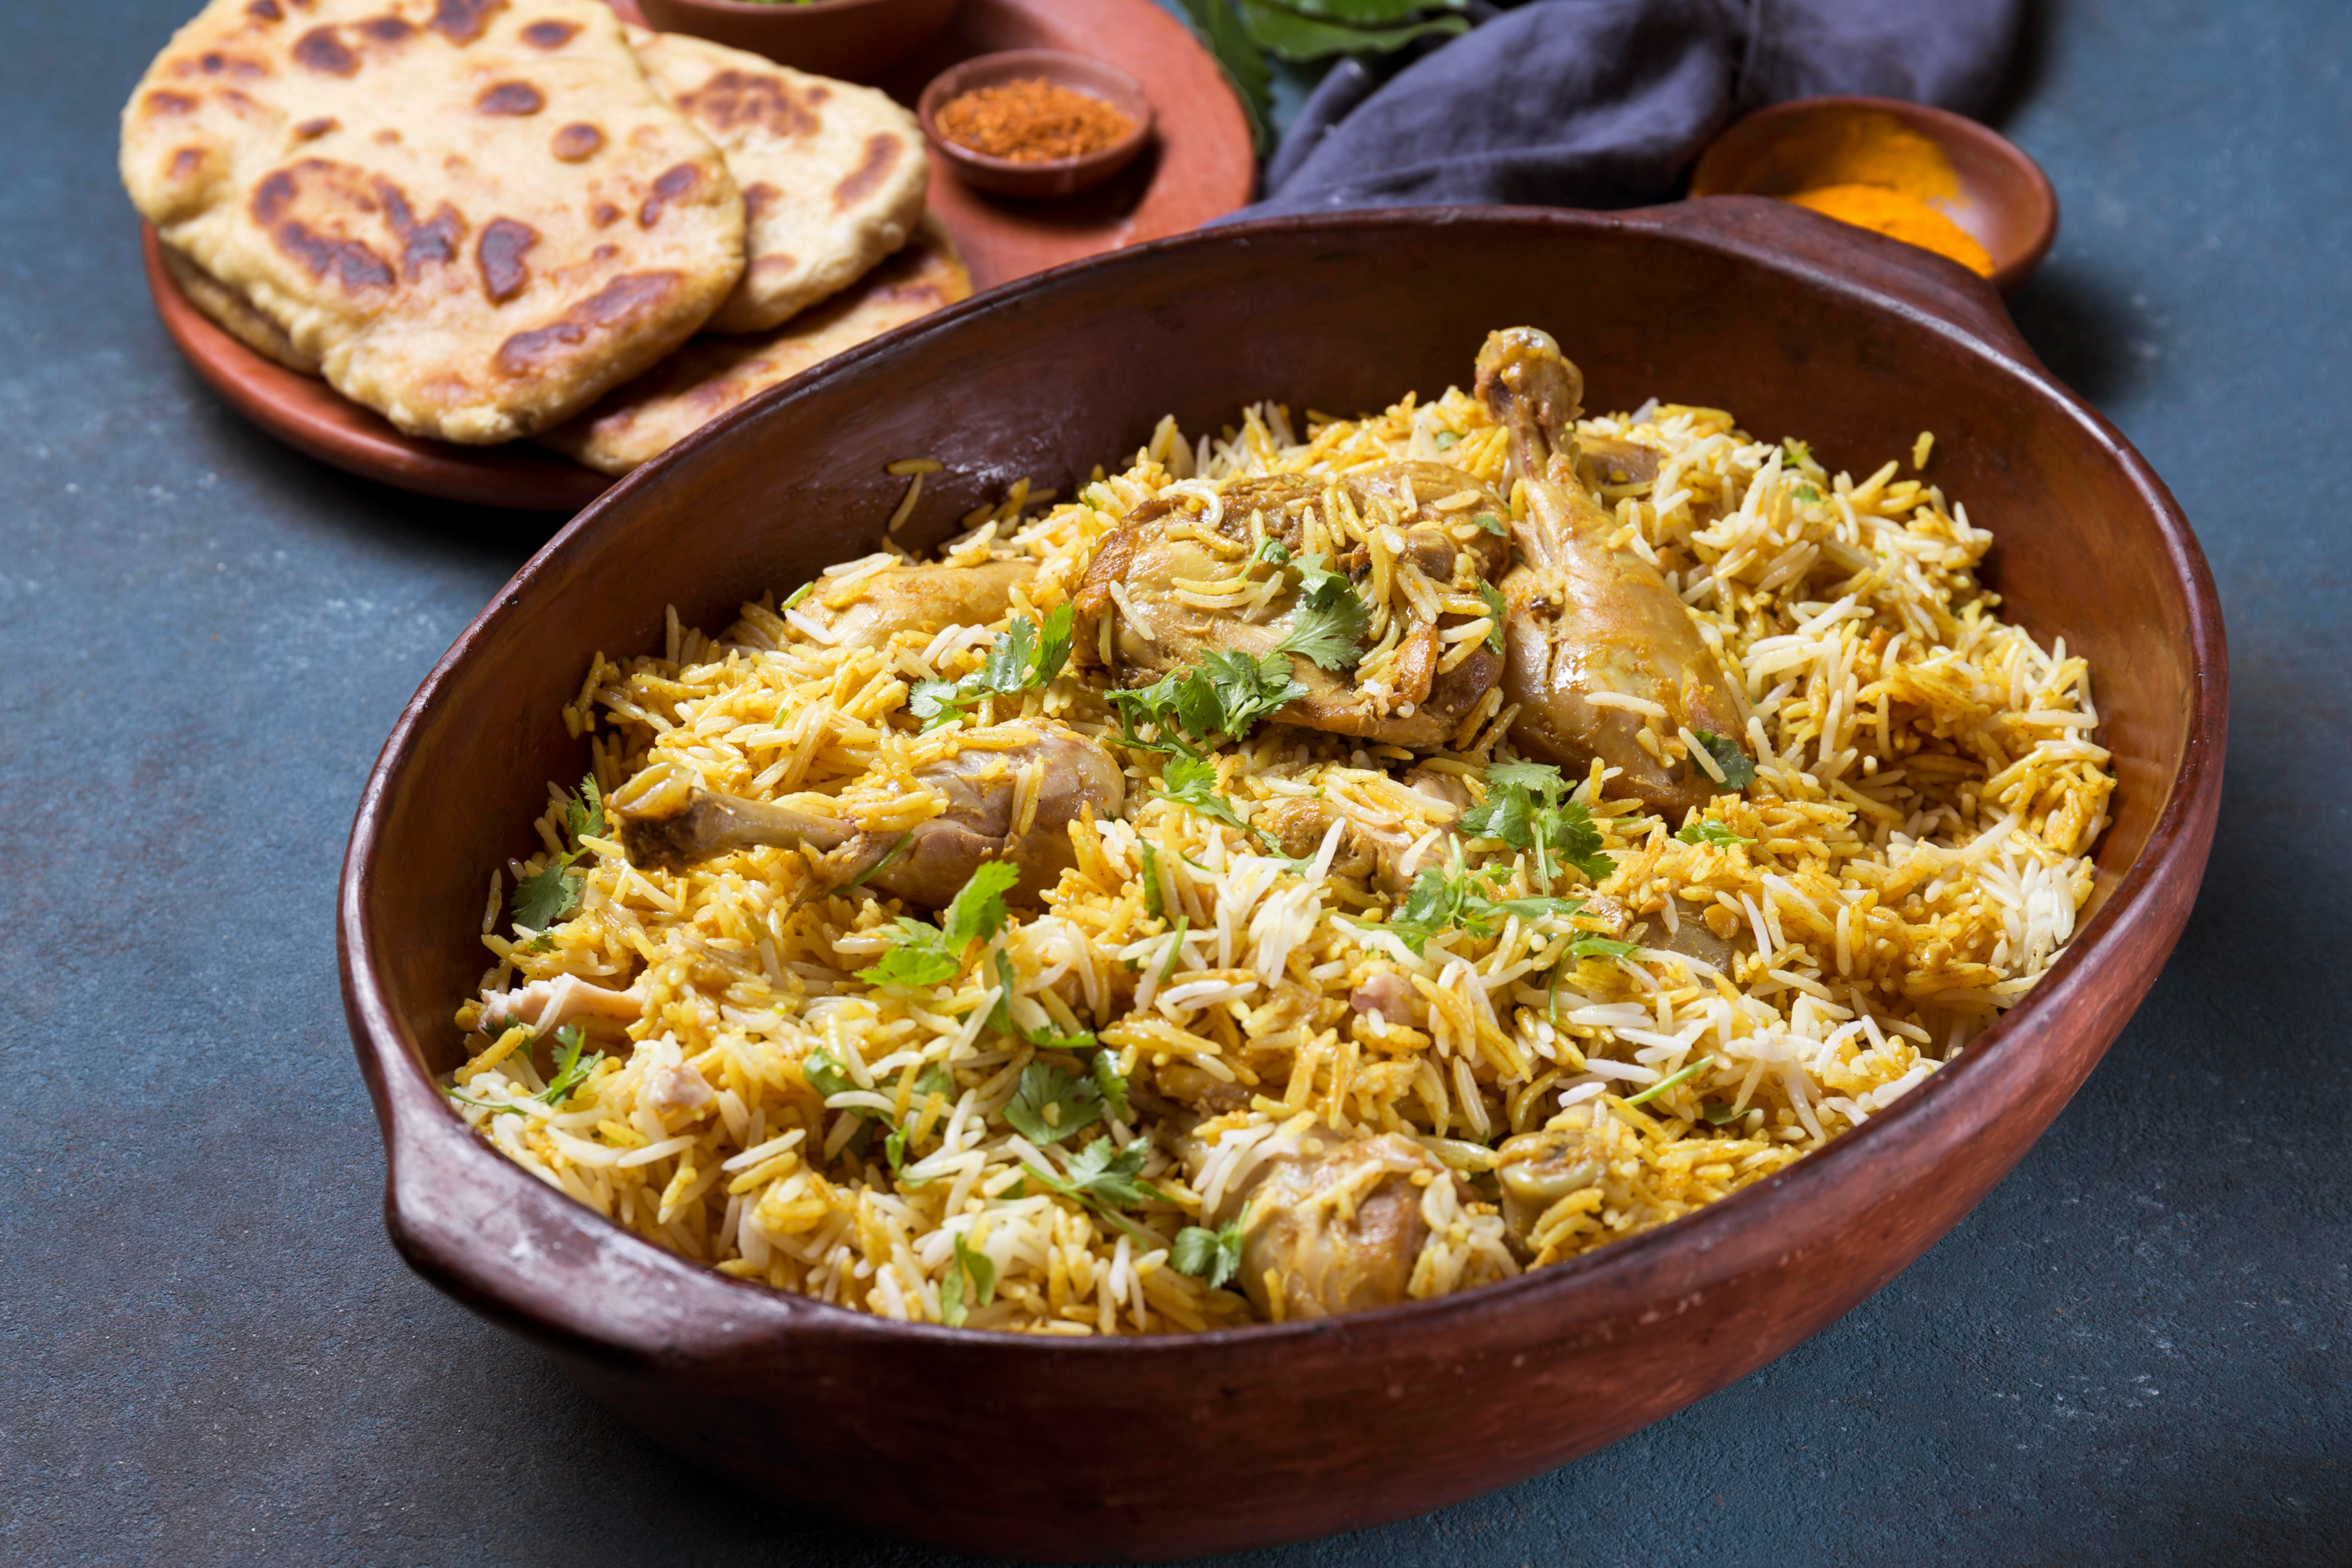 Hyderabadi Chicken Dum Biryani: A flavourful Indian dish with aromatic rice, tender chicken, and spices.